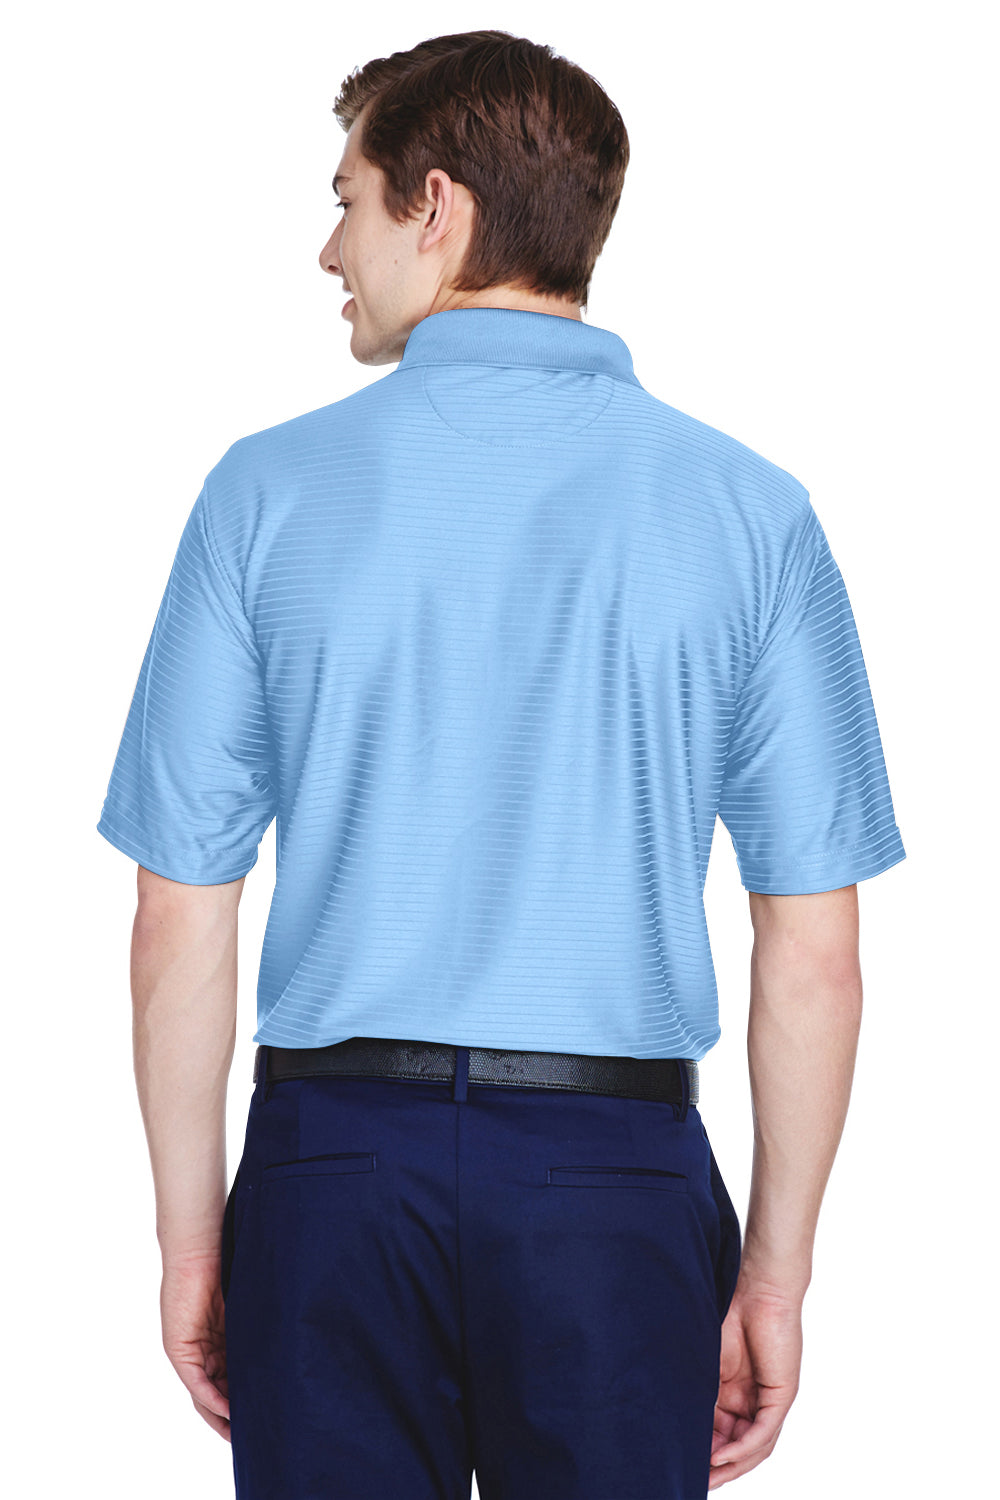 UltraClub 8413 Mens Cool & Dry Elite Performance Moisture Wicking Short Sleeve Polo Shirt Carolina Blue Back